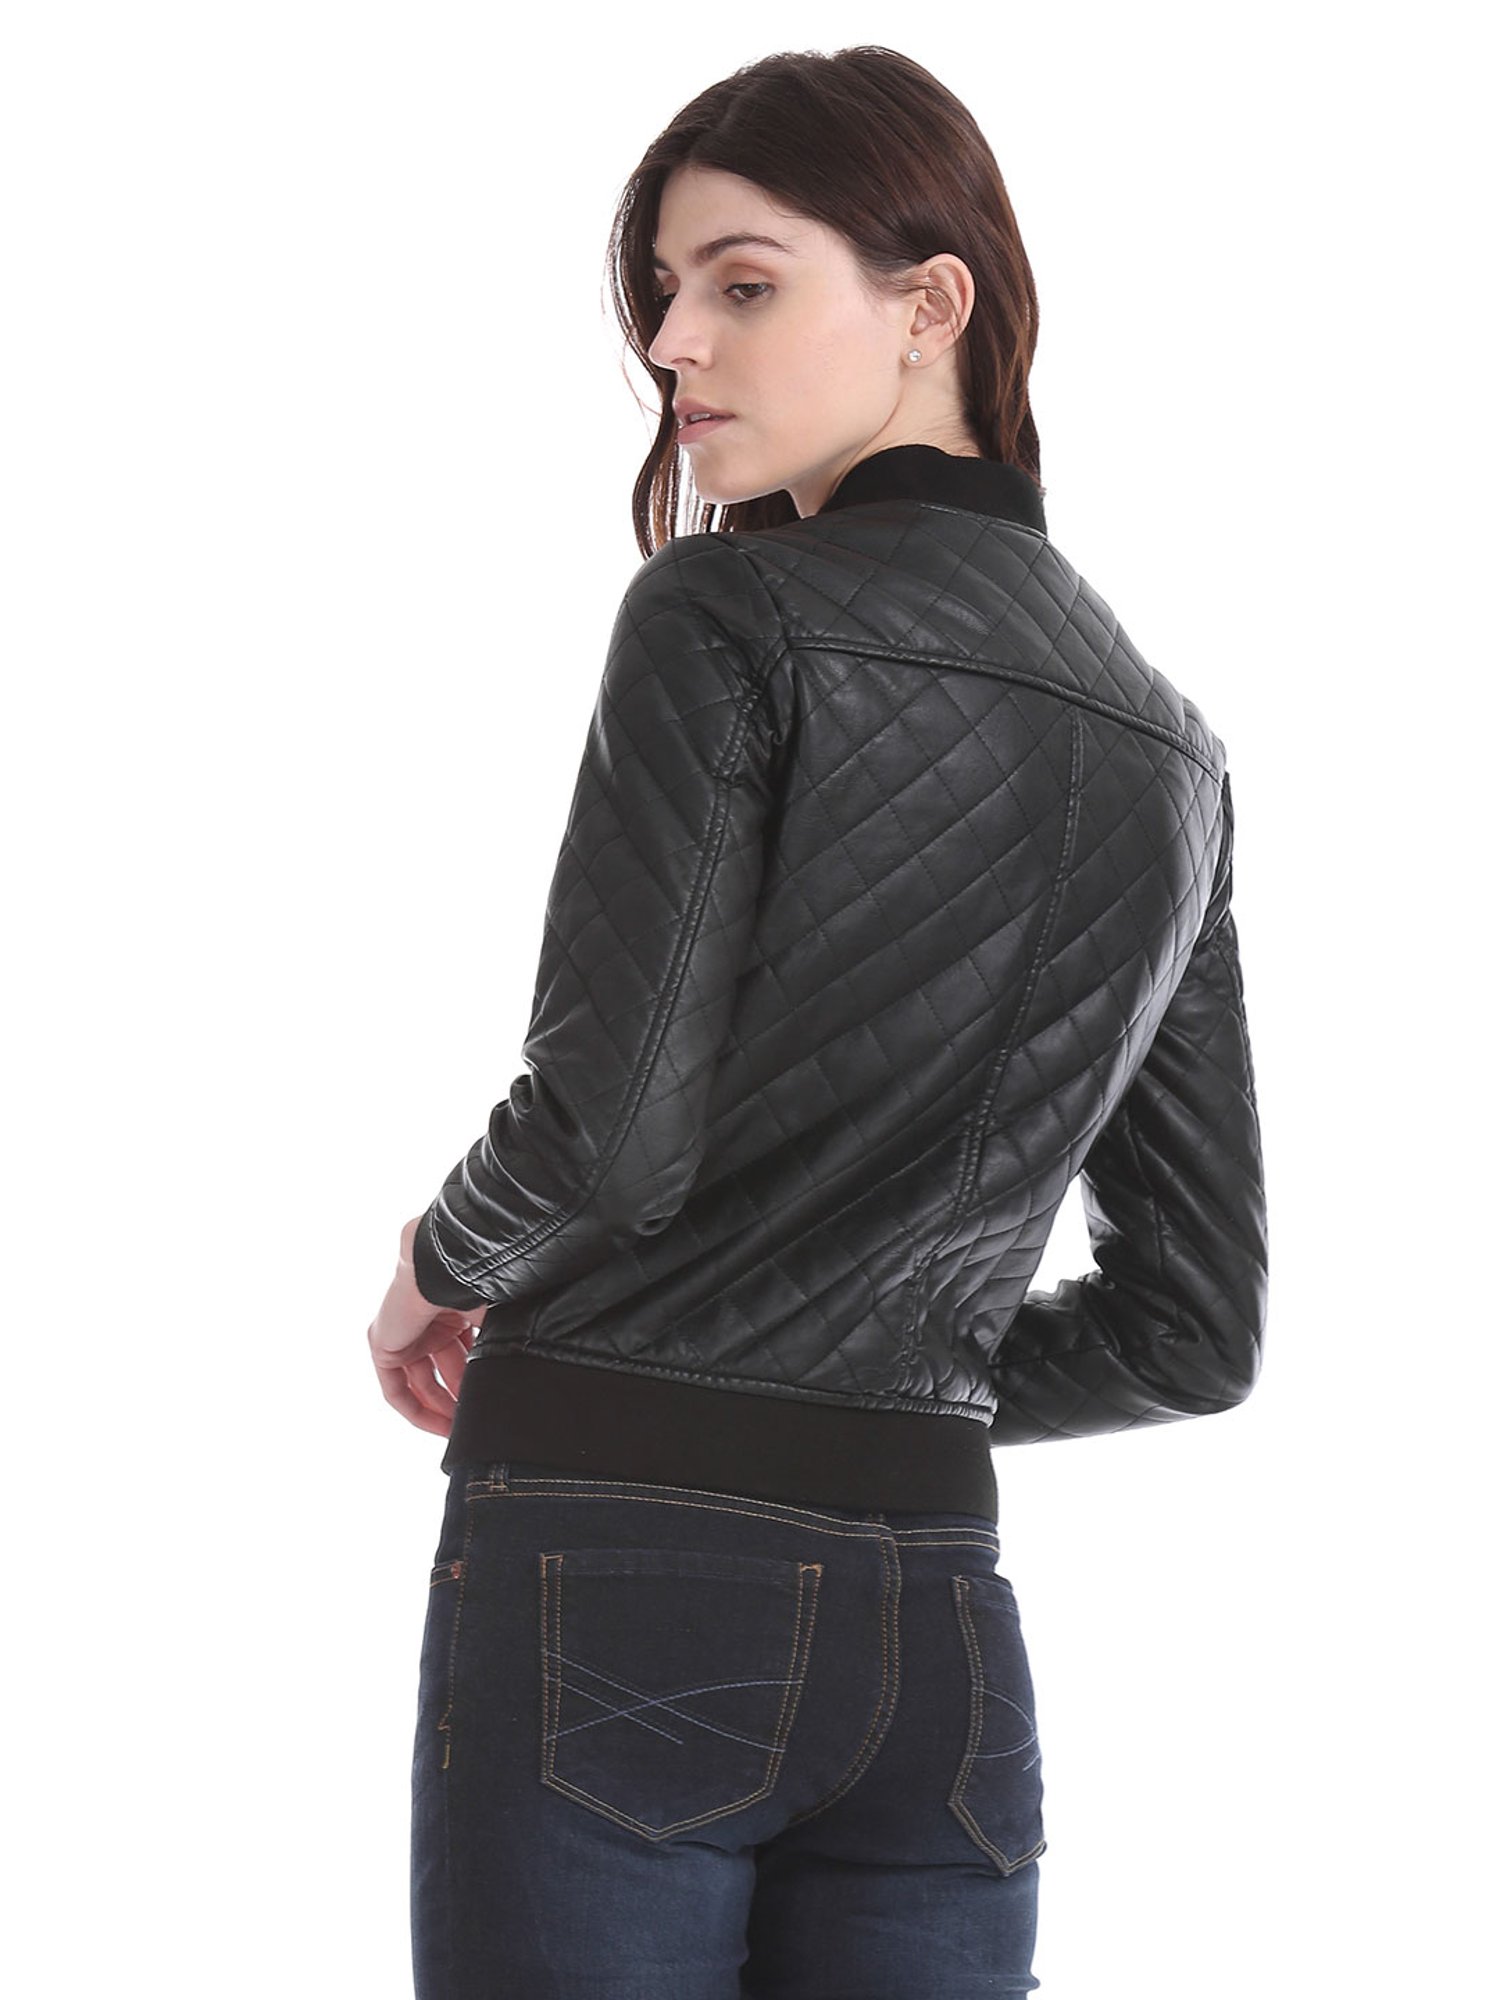 aeropostale jacket womens small gray | eBay